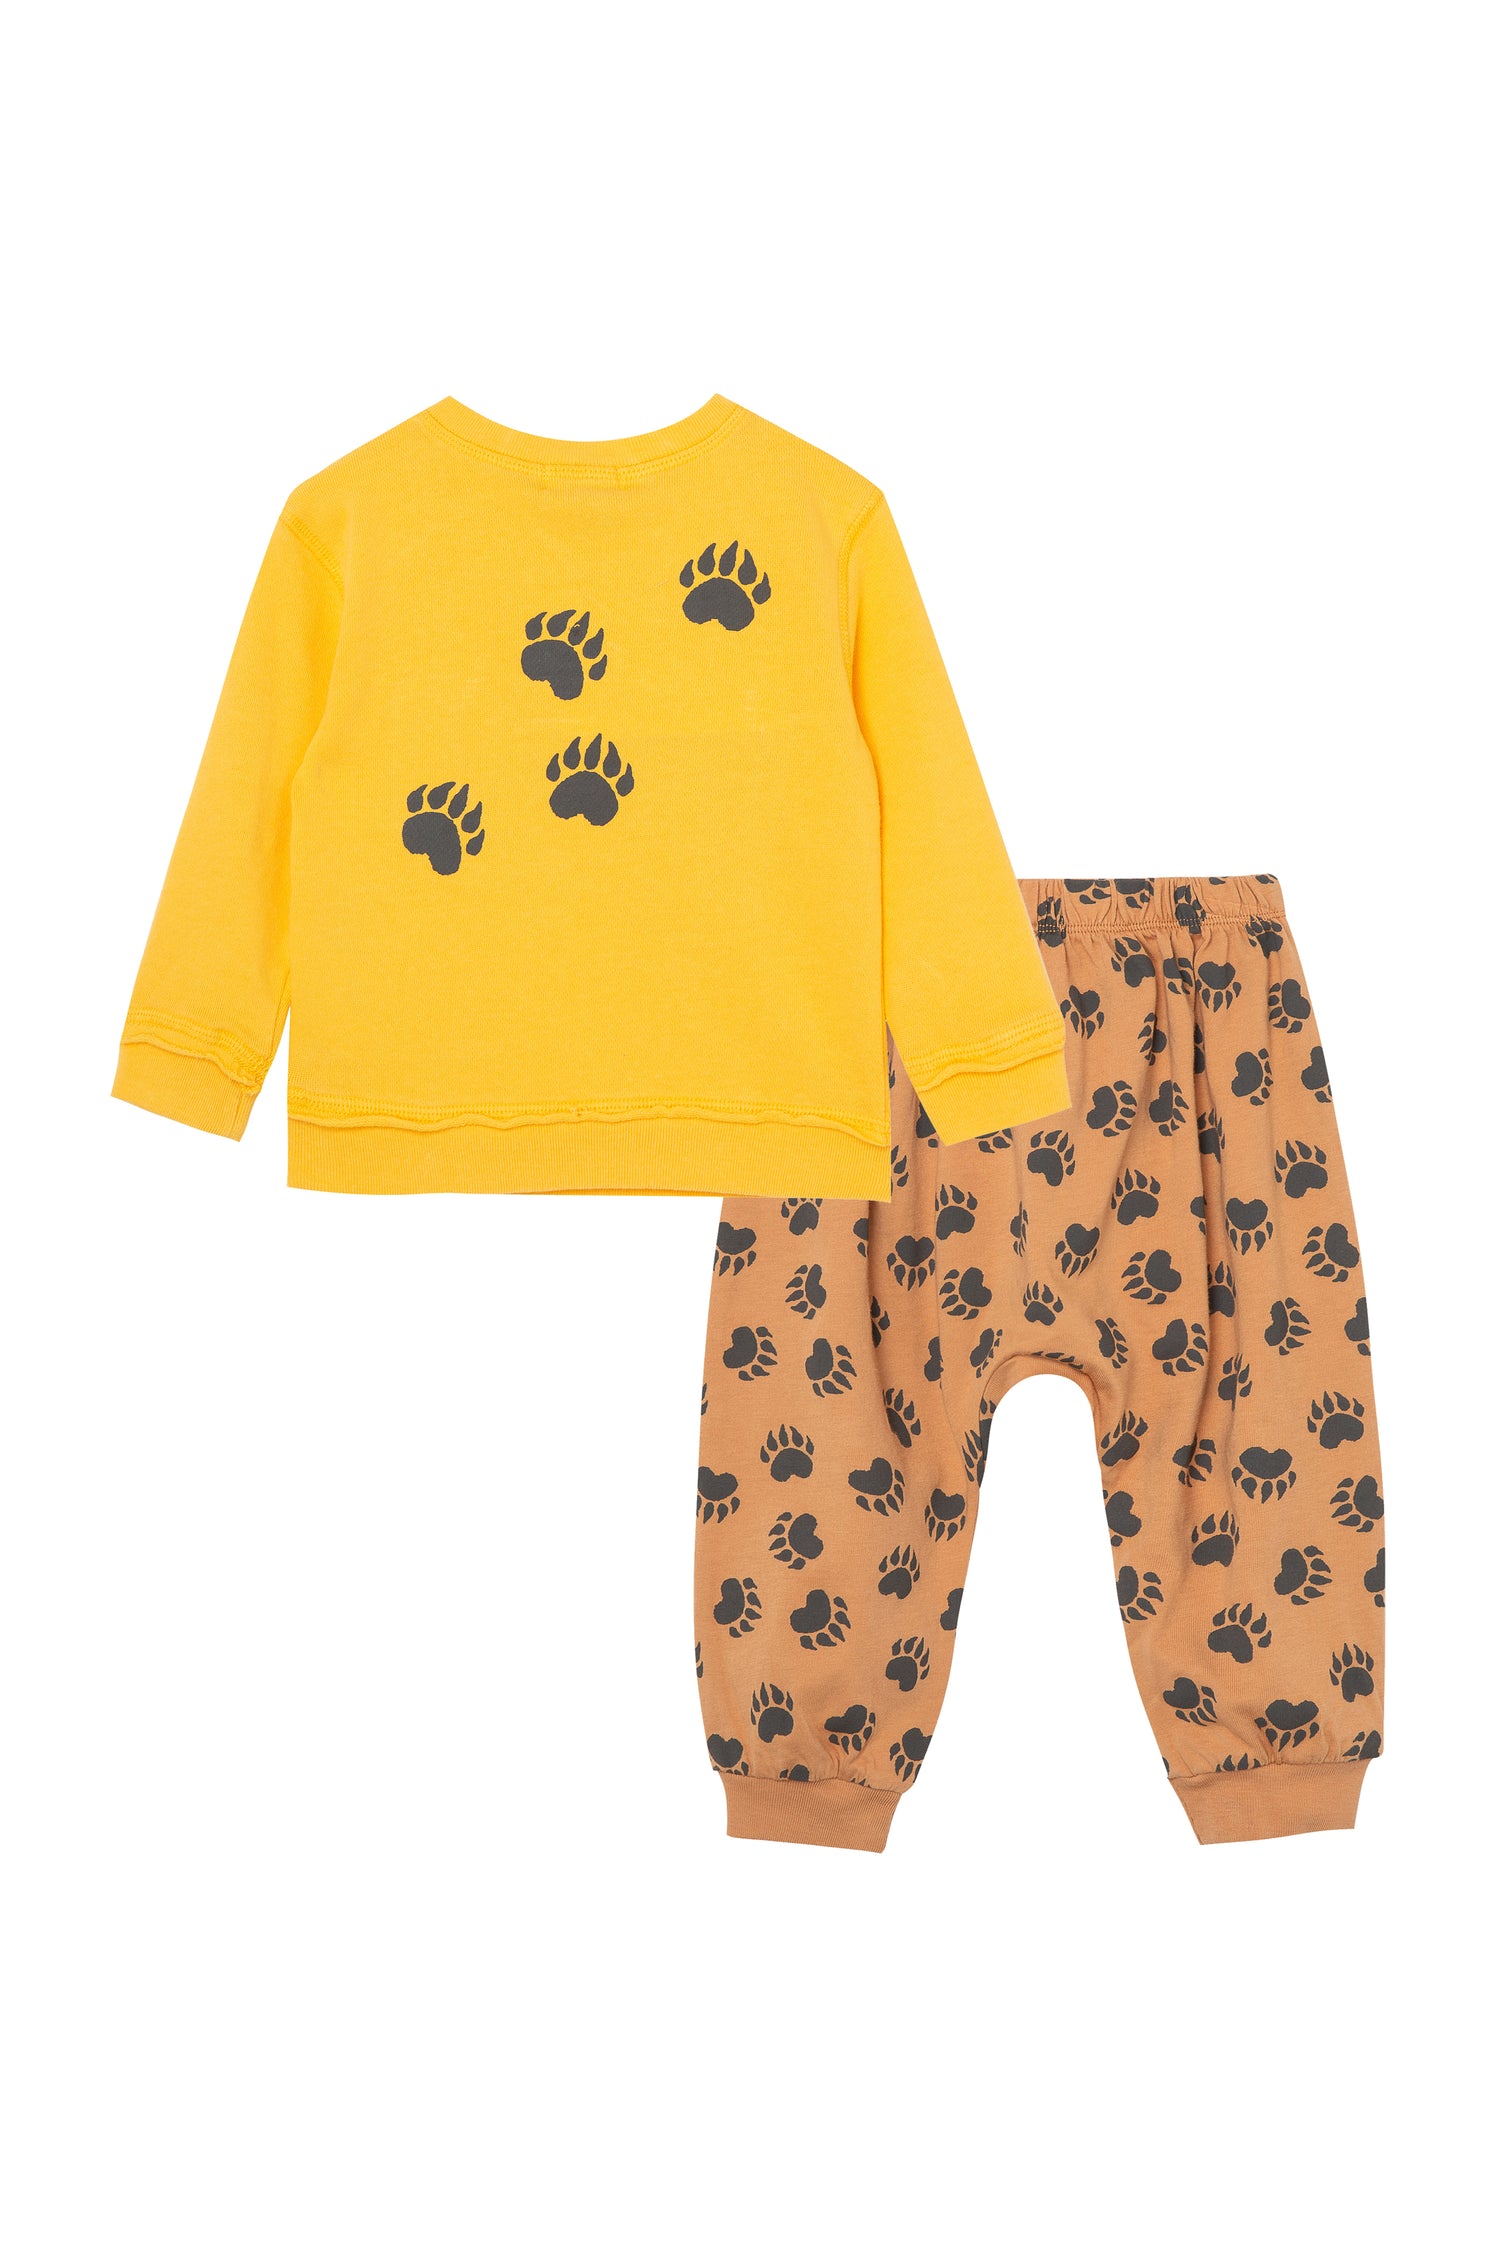 Back of yellow sweatshirt with bear print and brown bear print pattern pants